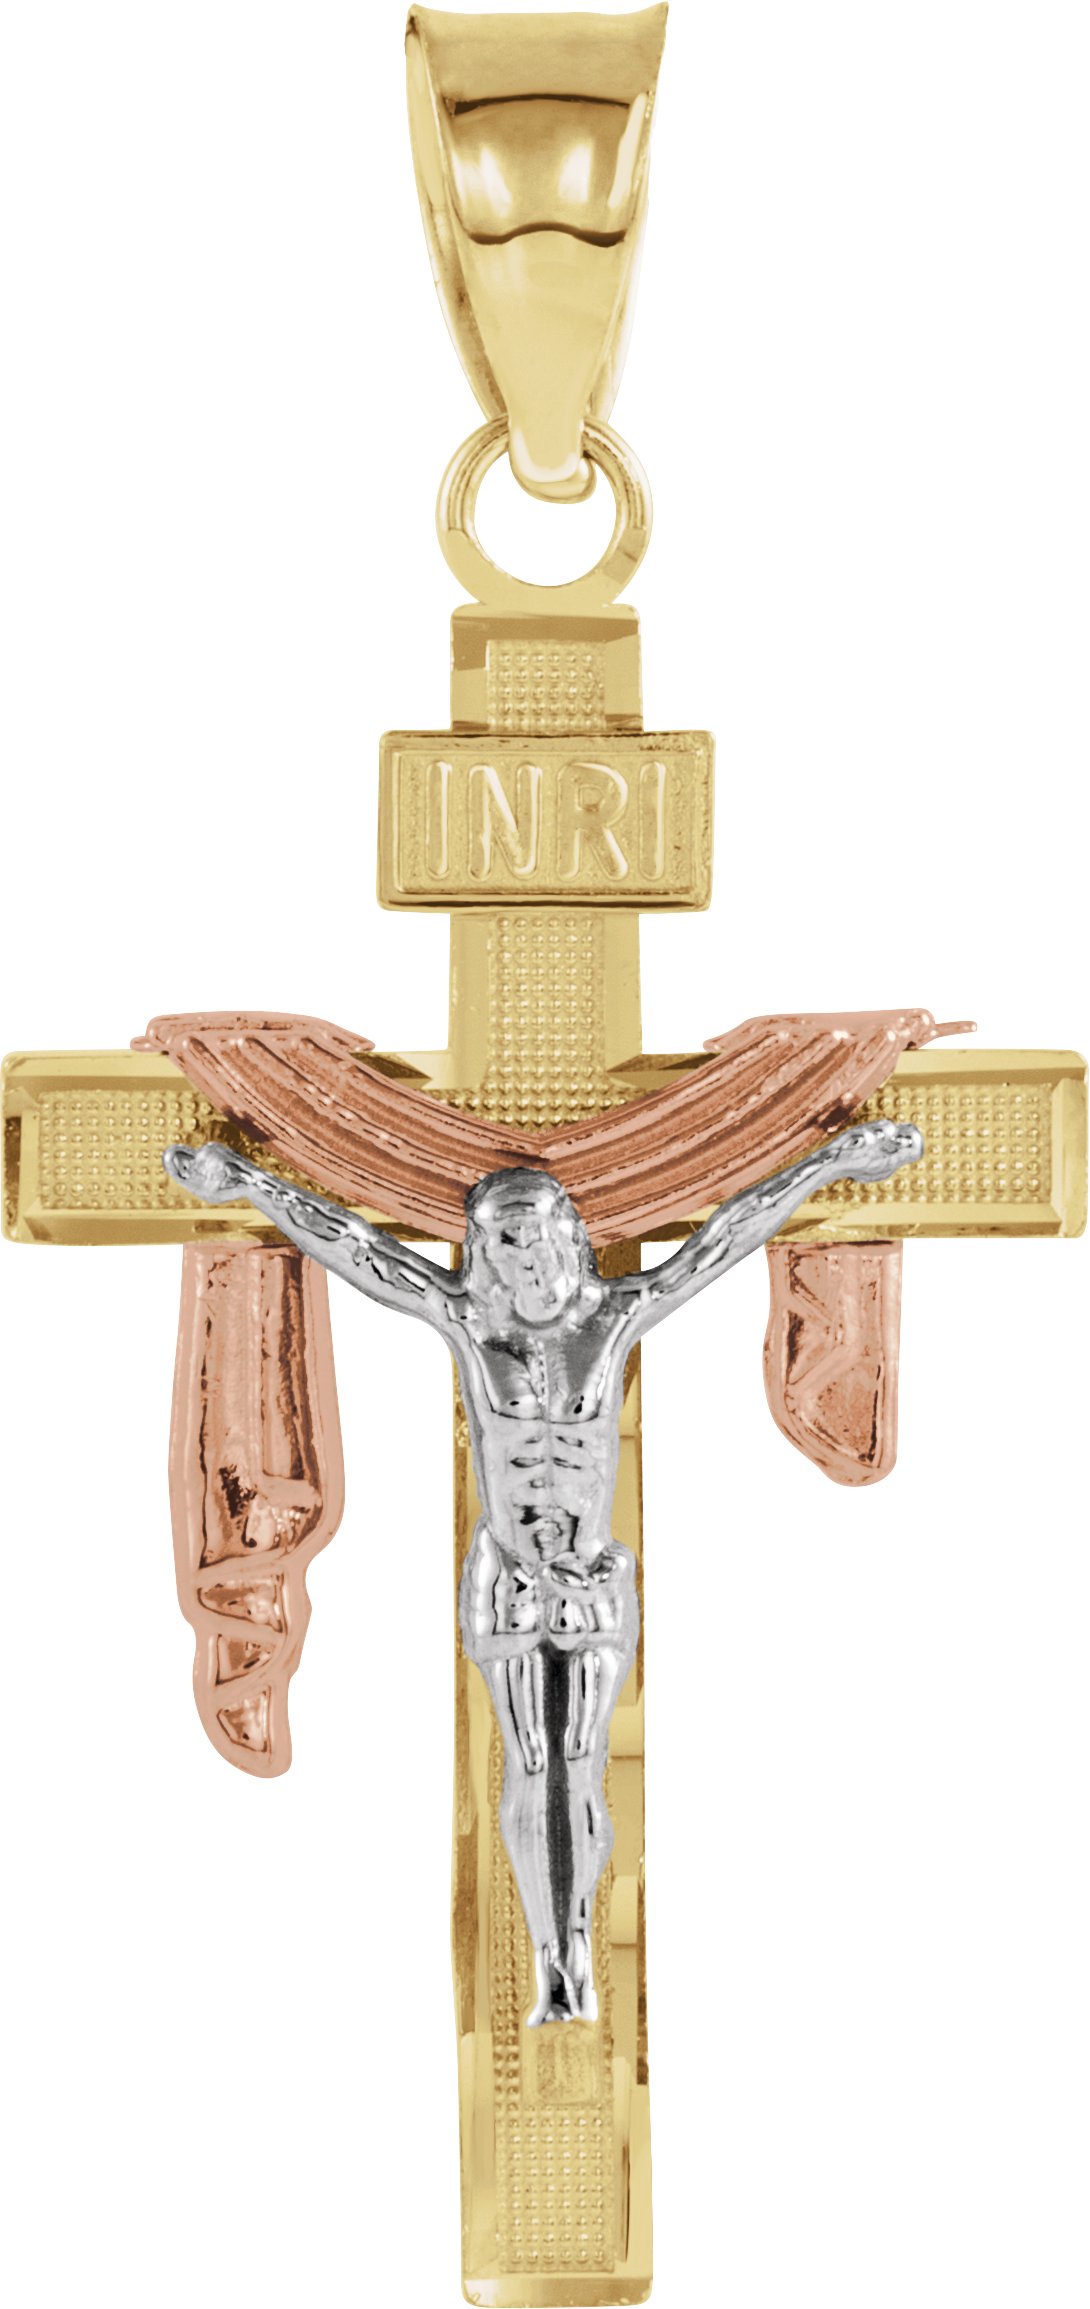 Tri Color Crucifix with Shroud Pendant 23.5 x 15mm Ref 641984